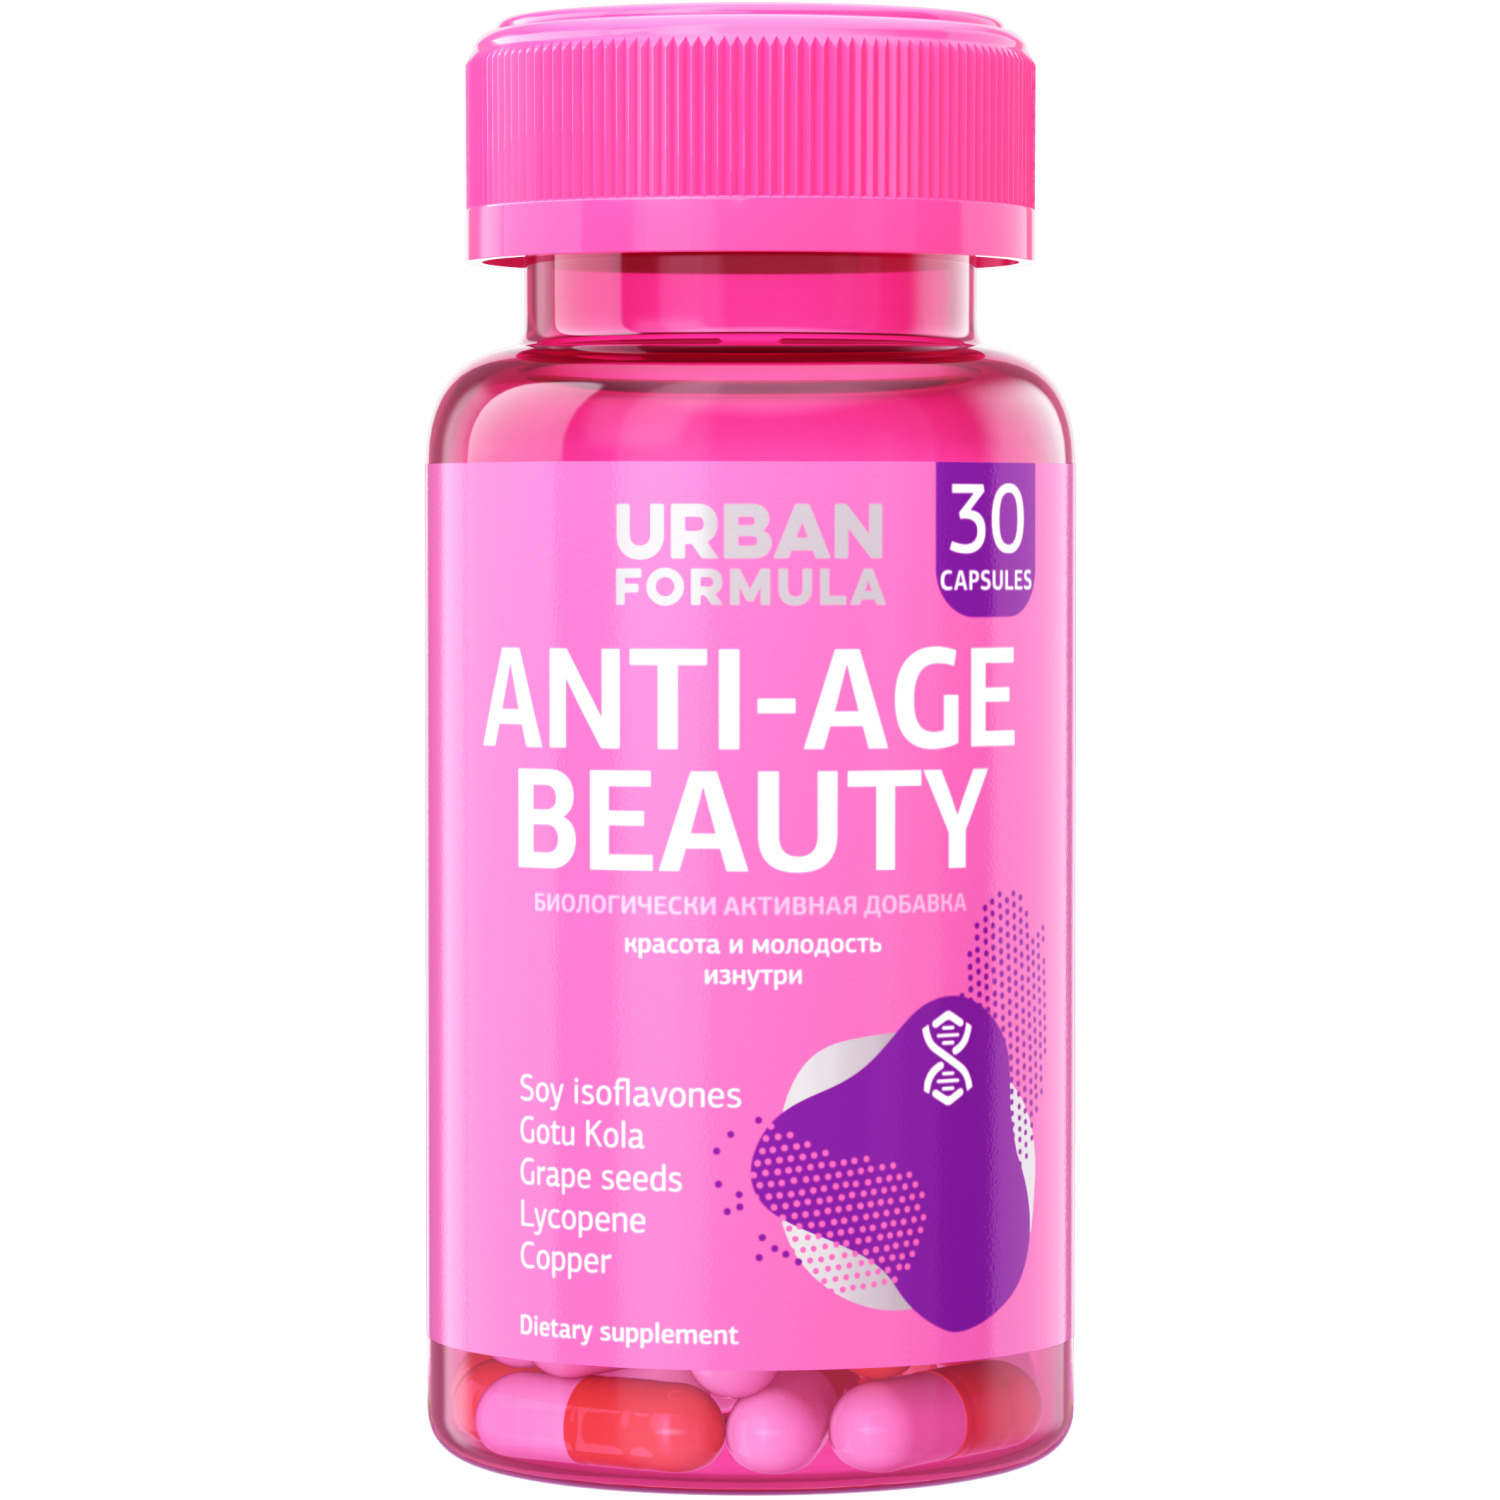 Комплекс для молодости и красоты URBAN FORMULA Anti-Age Beauty, 30 капсул